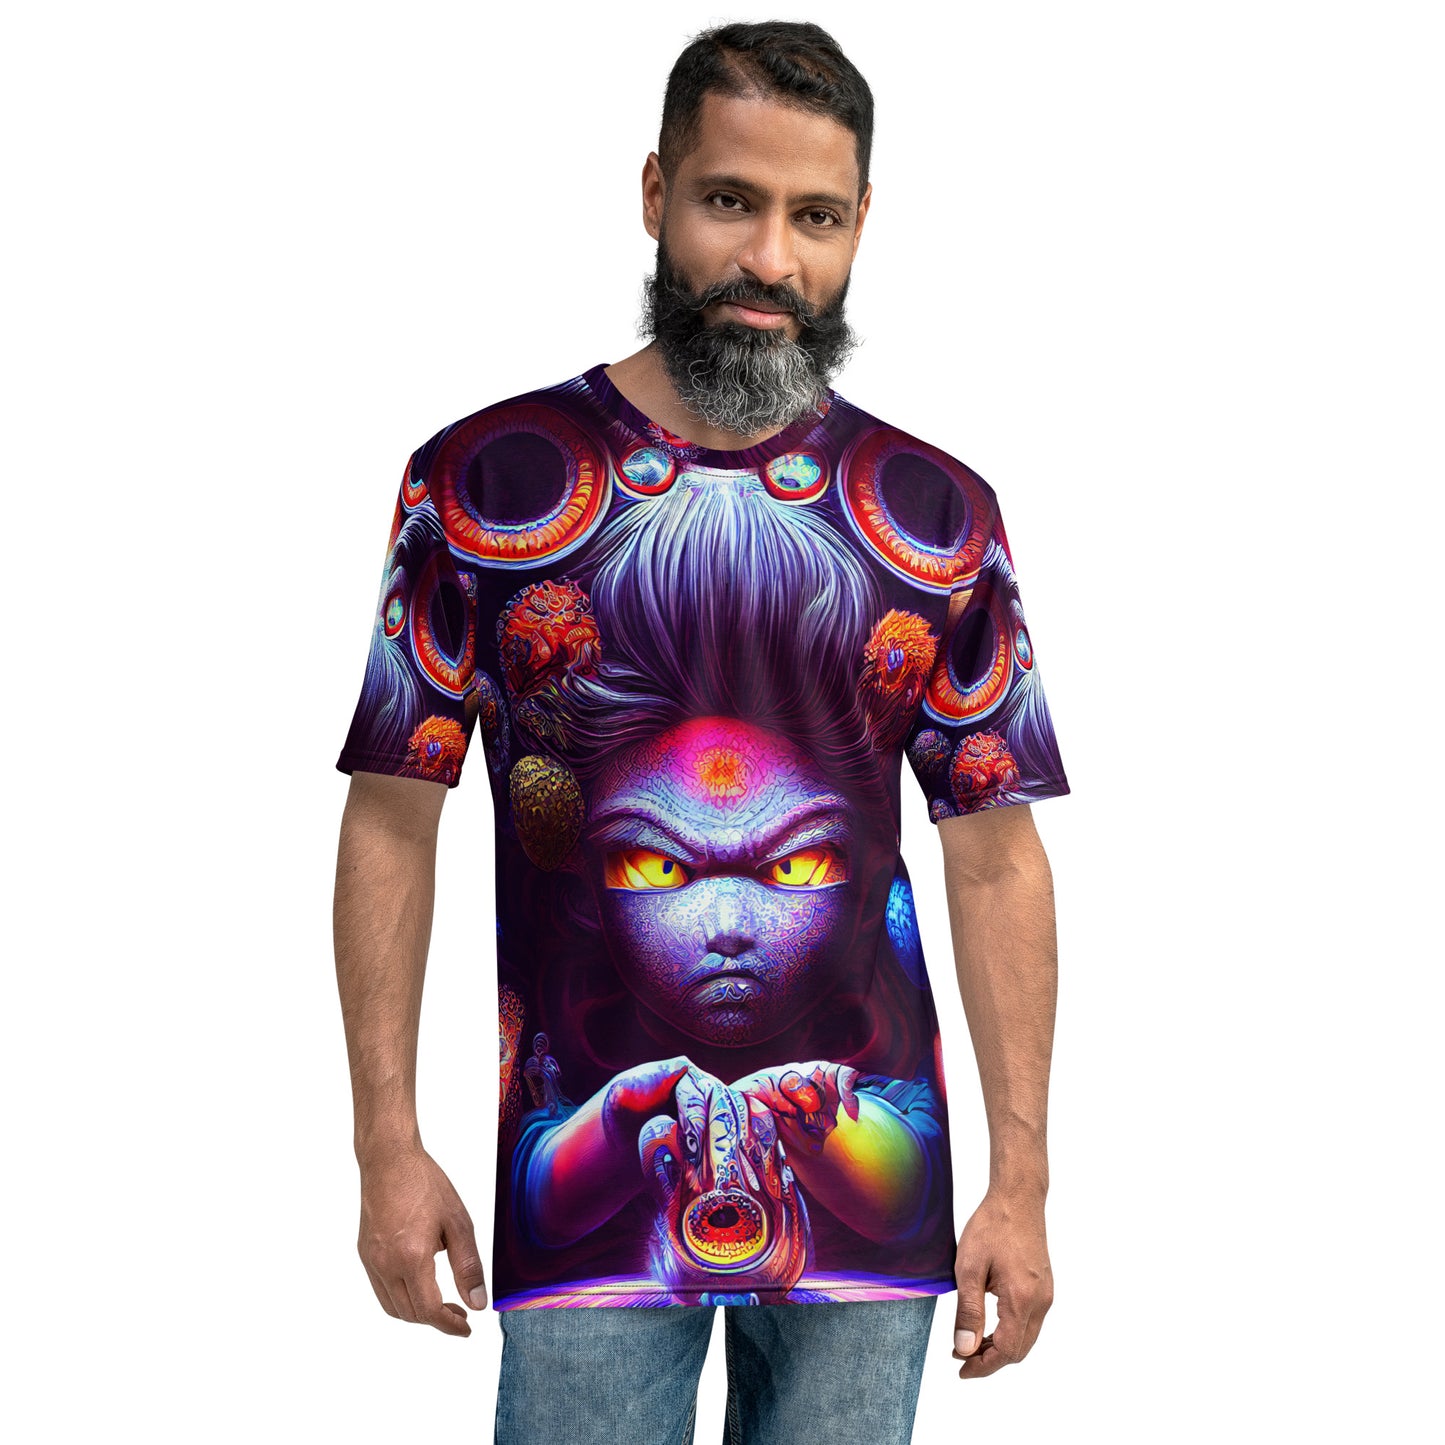 Super Saiyan in Wonderland 1.0 Men's t-shirt